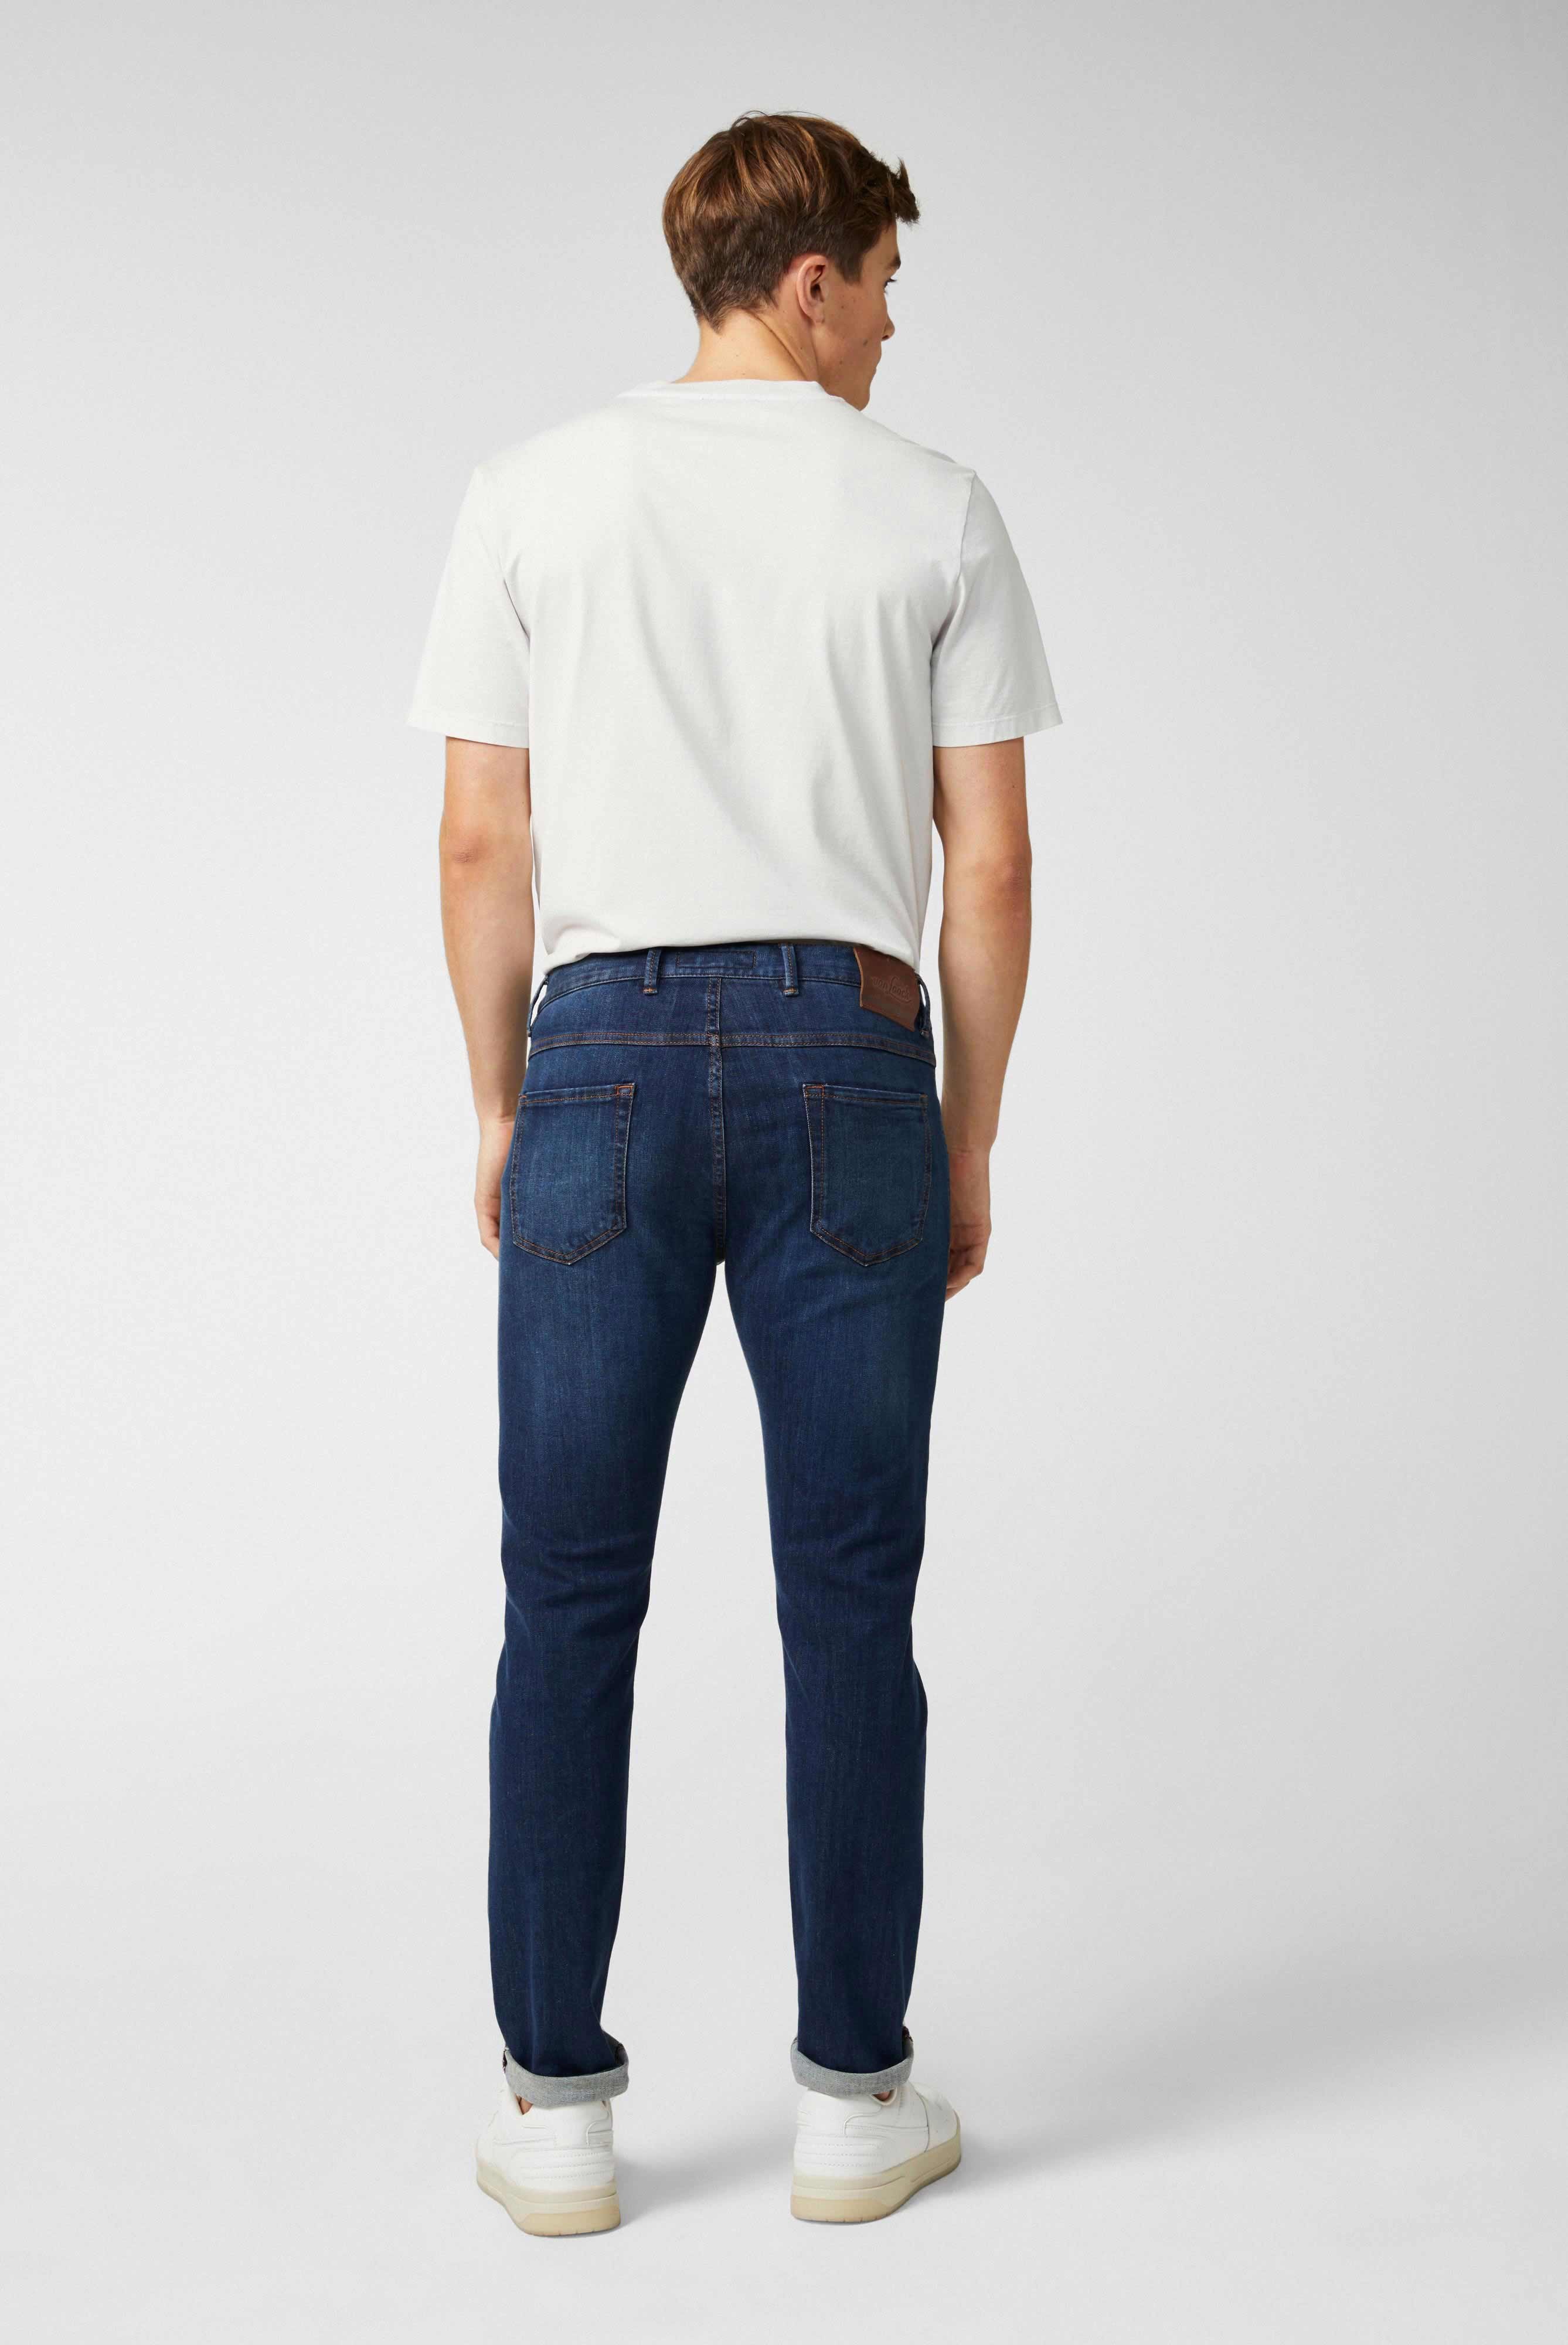 Jeans & Hosen+Jeanshose mit Streth Slim Fit+80.7857..J00117.780.29N